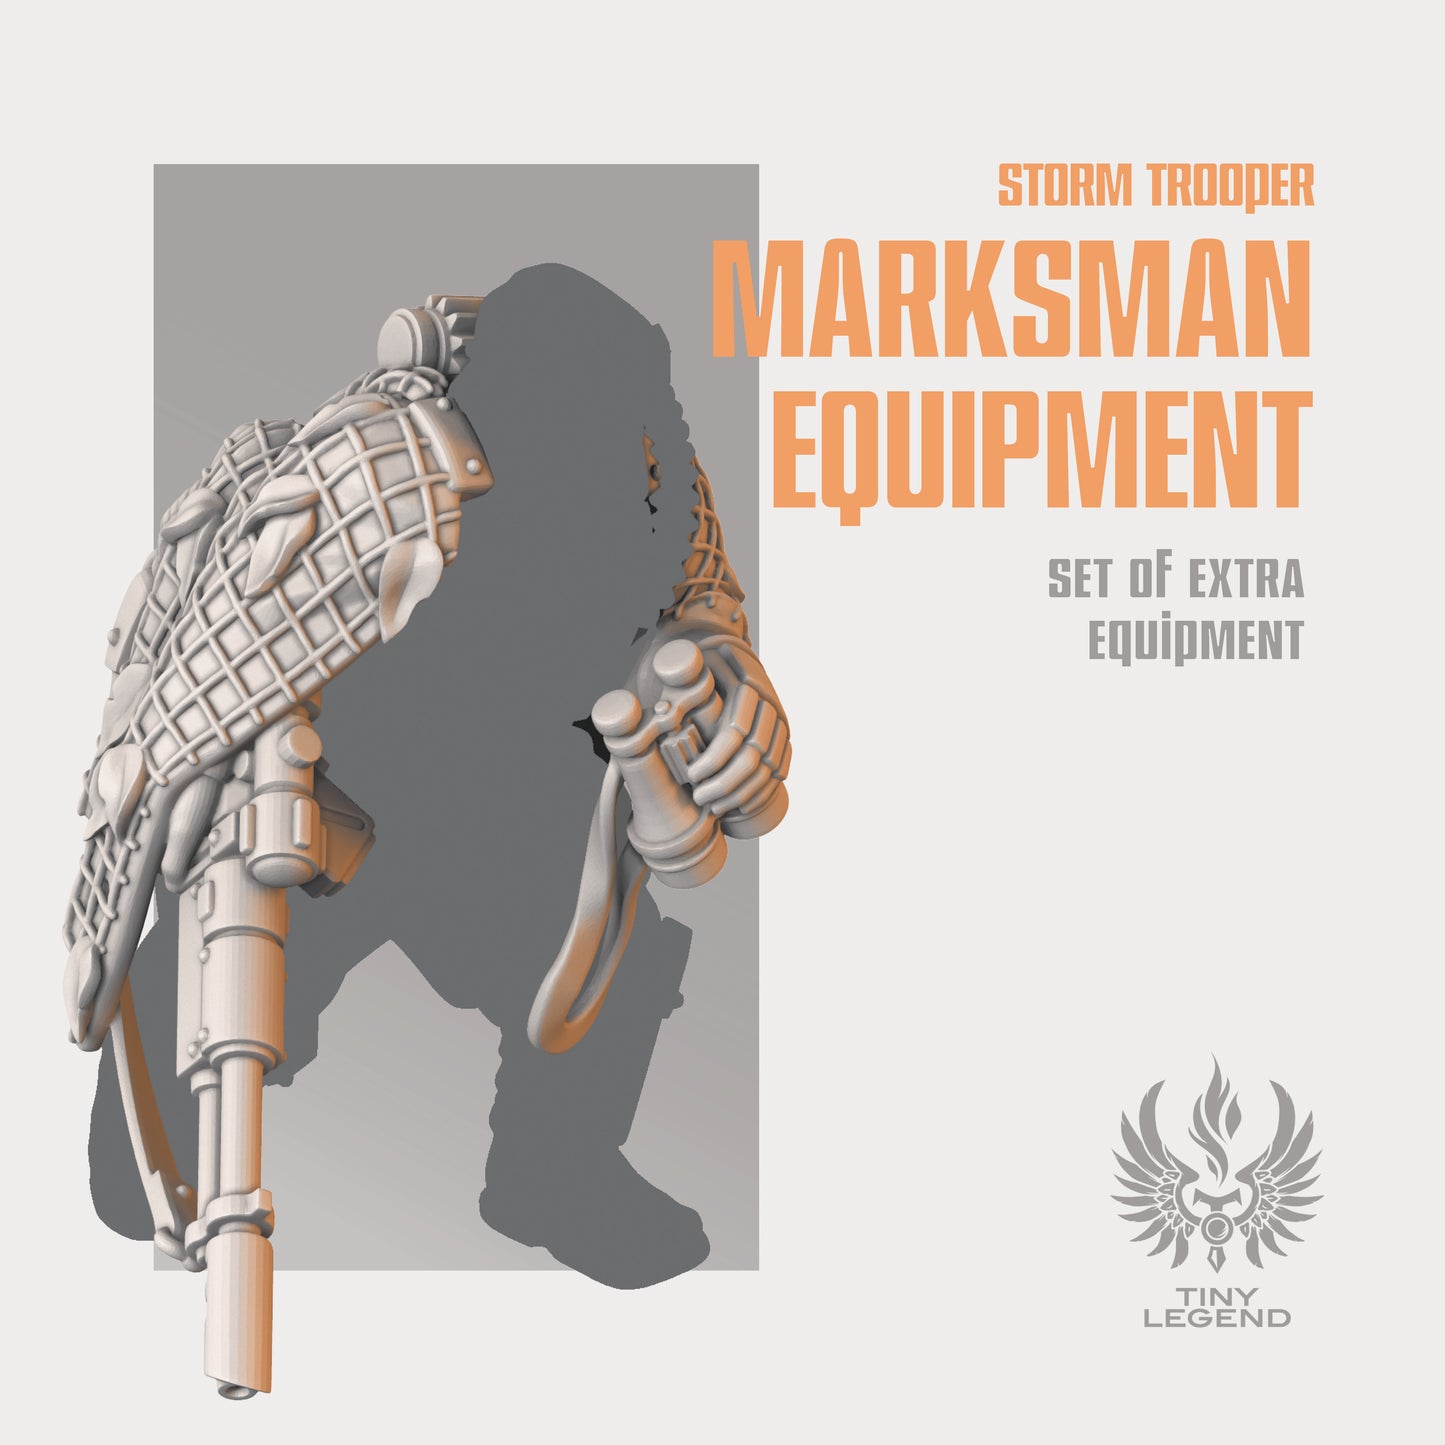 Storm trooper marksman equipment